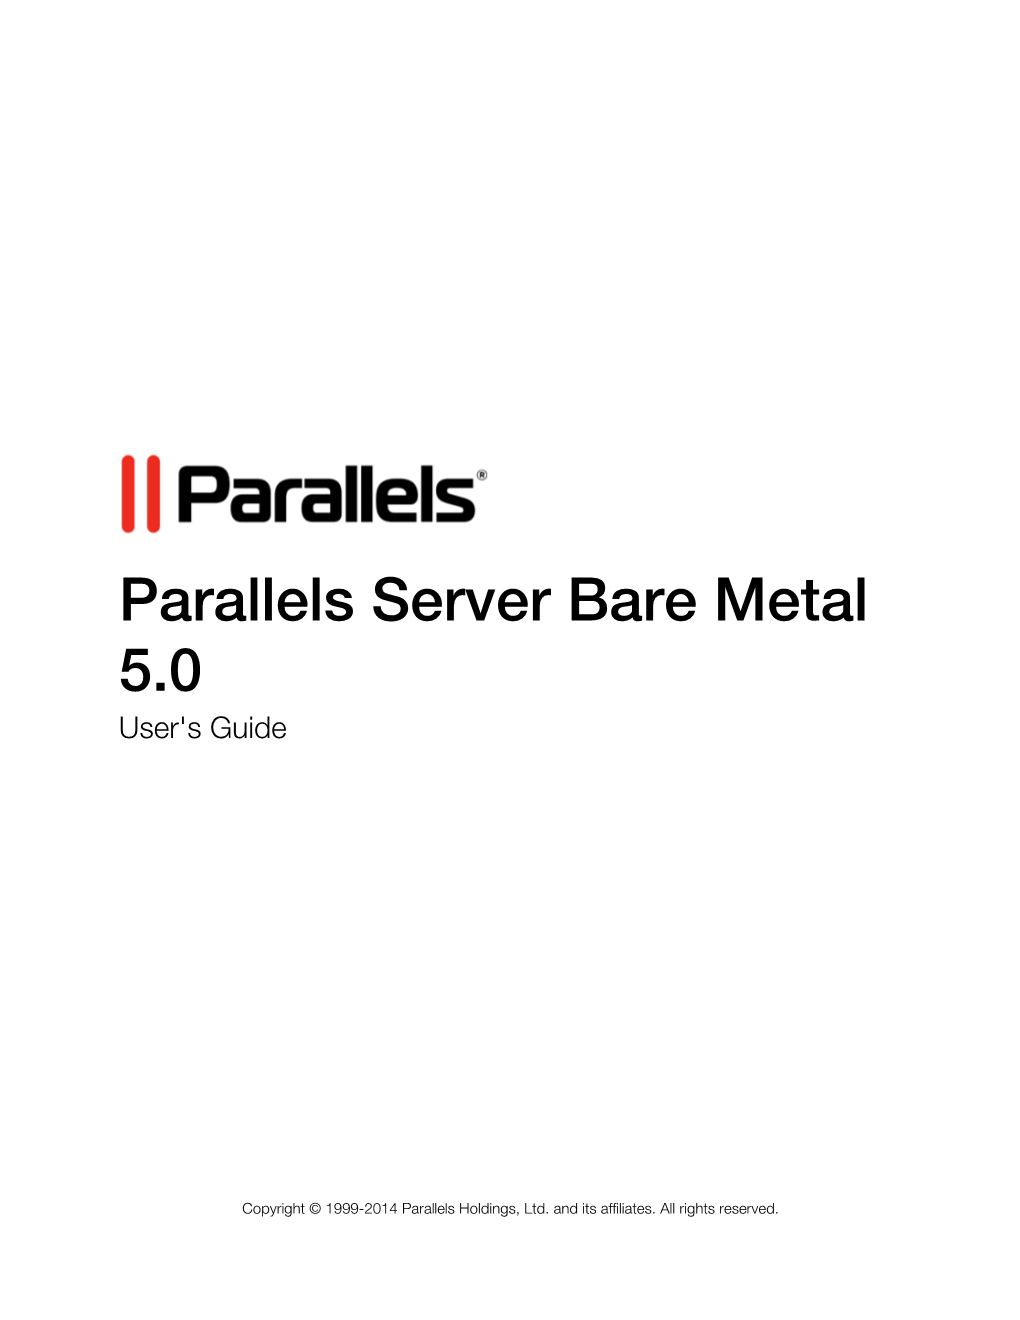 Parallels Server Bare Metal 5.0 User's Guide